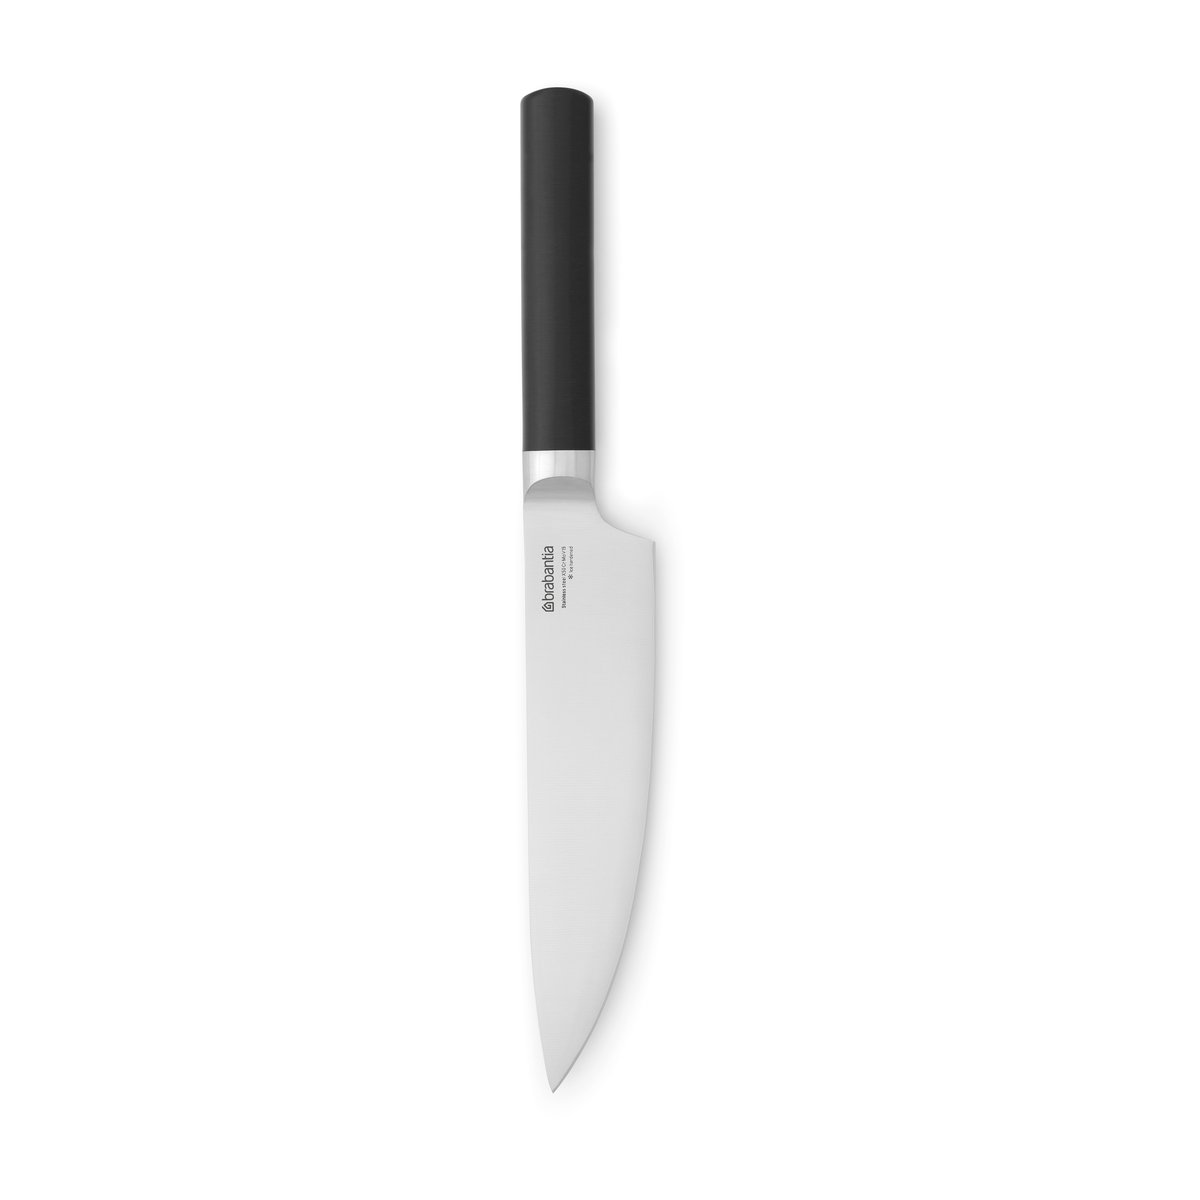 Brabantia Profile kockkniv 34 cm Svart-rostfritt stål